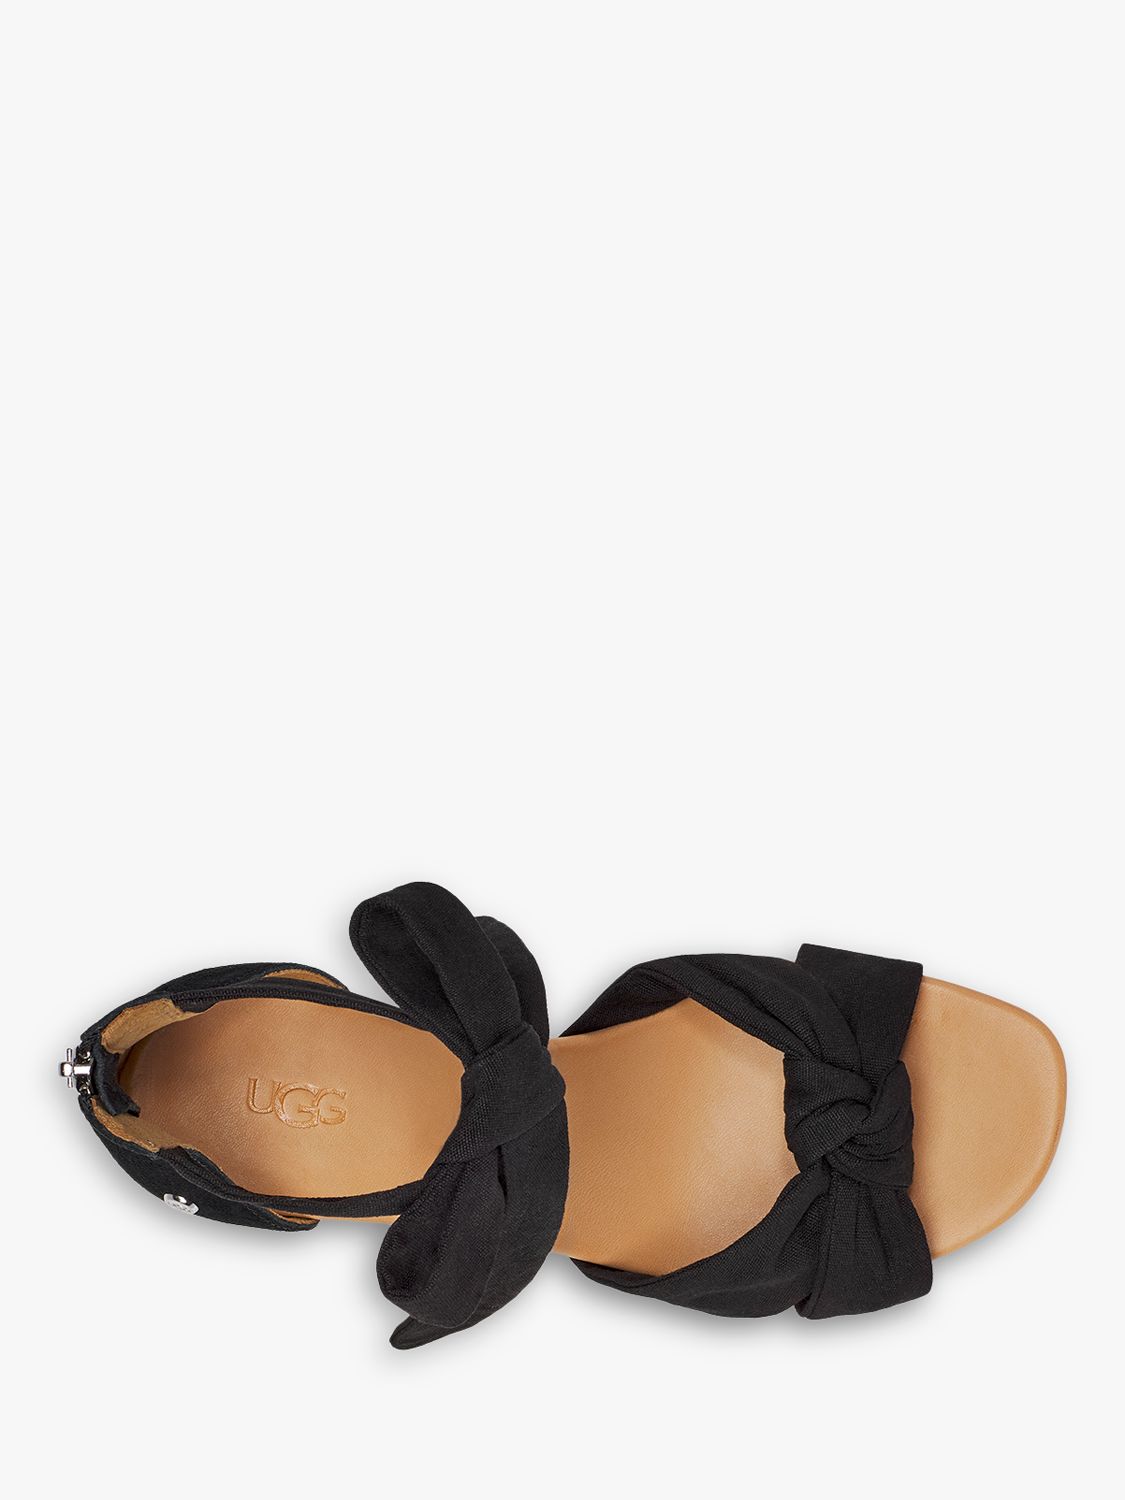 Buy UGG Yarrow Wedge Sandals Online at johnlewis.com